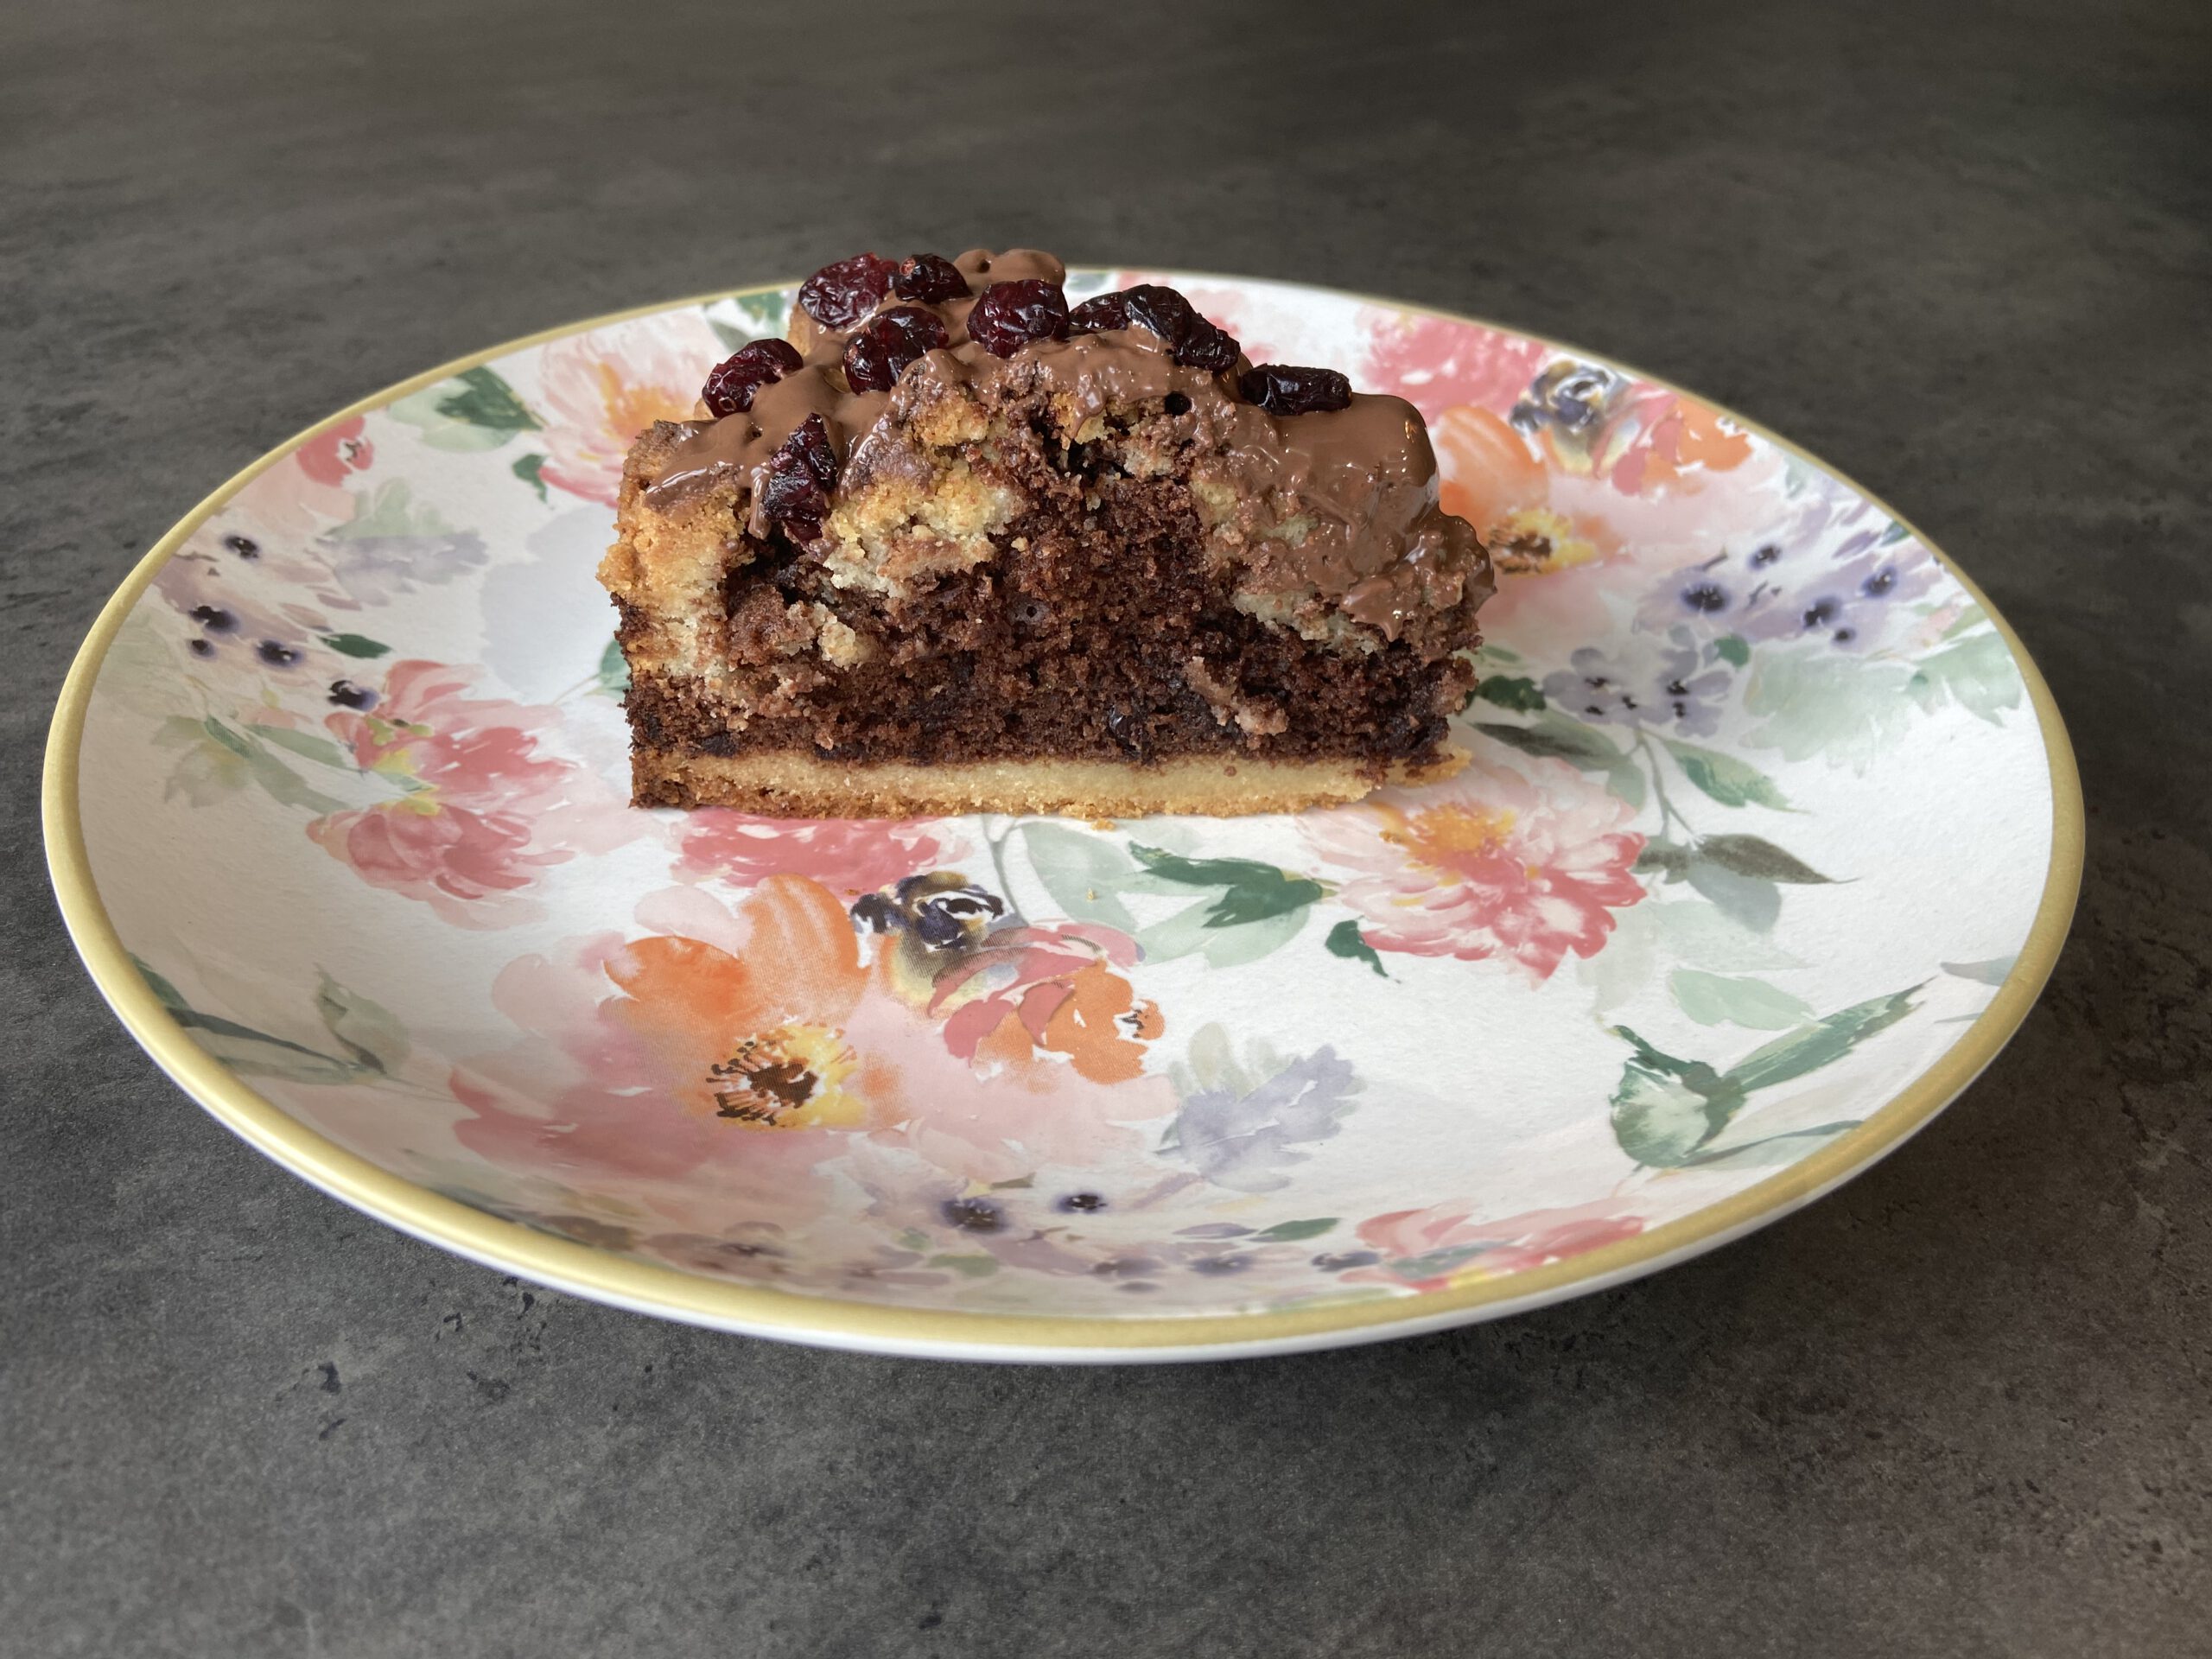 Cranberry Schokoladen Kuchen mit Krümel (Streuseln) – Jannika ️